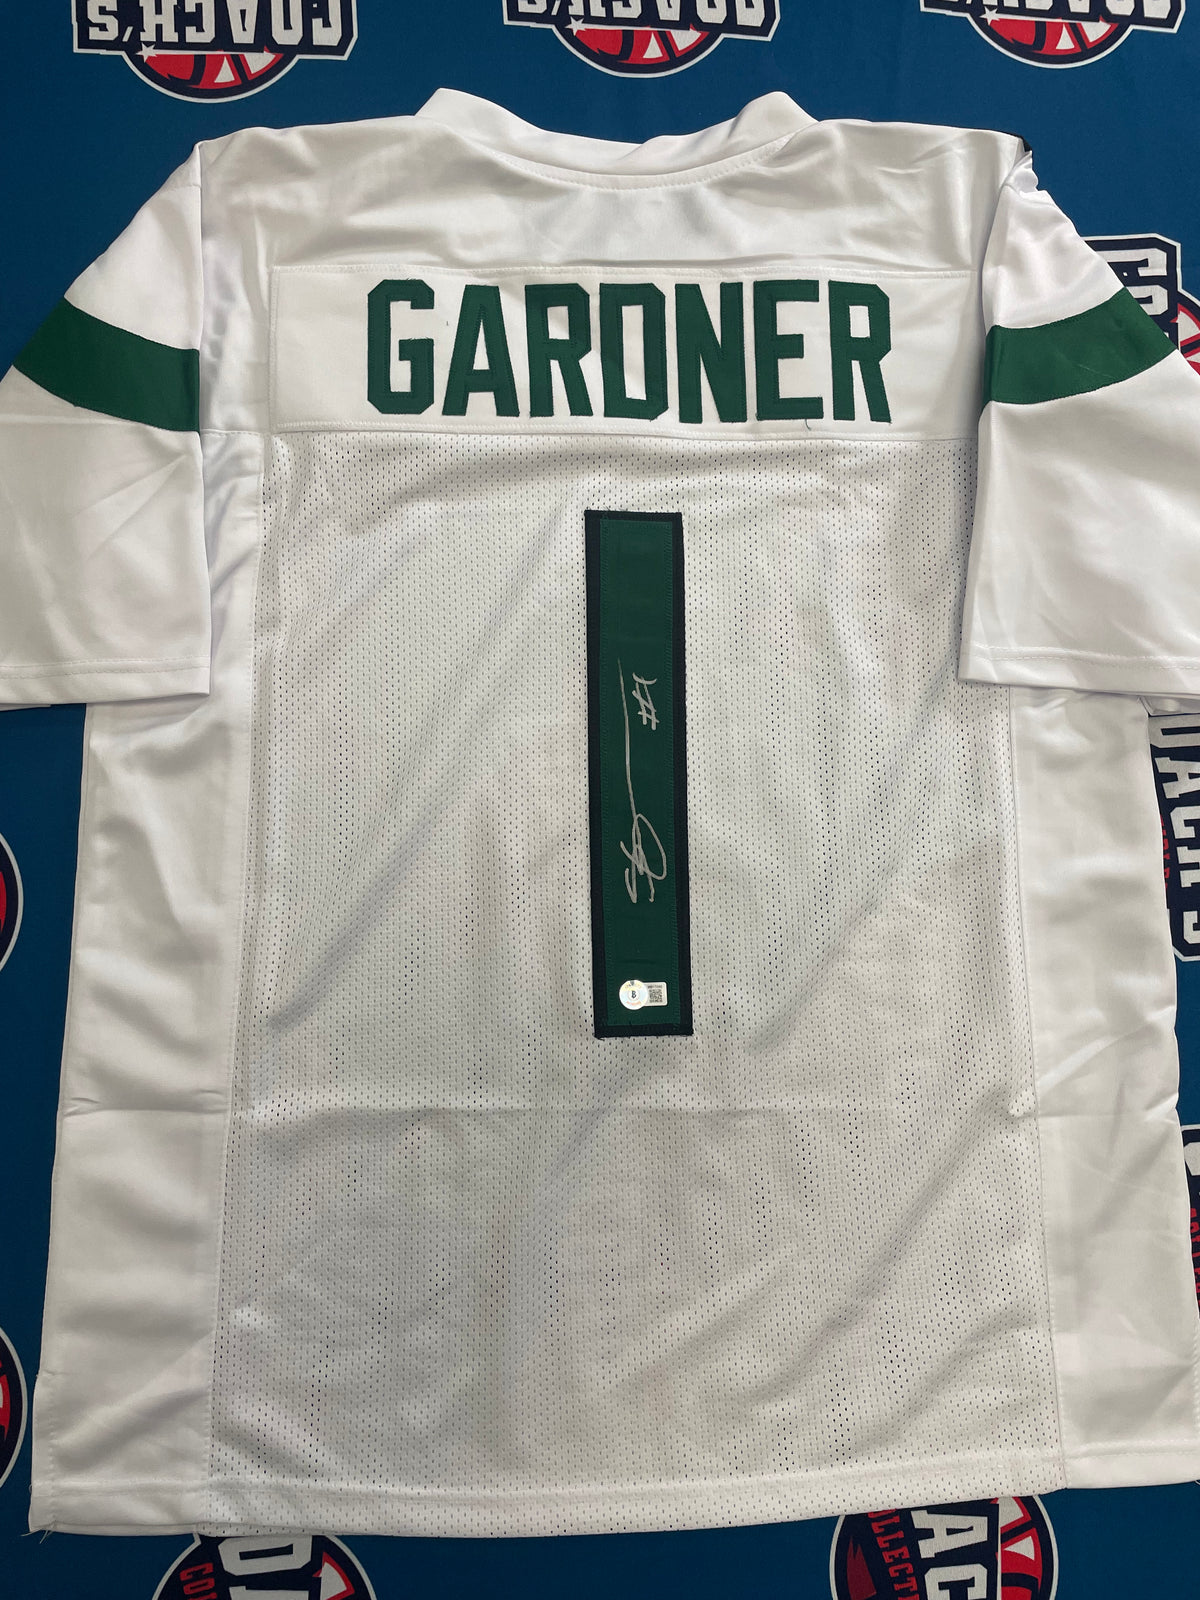 Ahmad Sauce Gardner Autographed Framed New York Jets Jersey (Fanatic